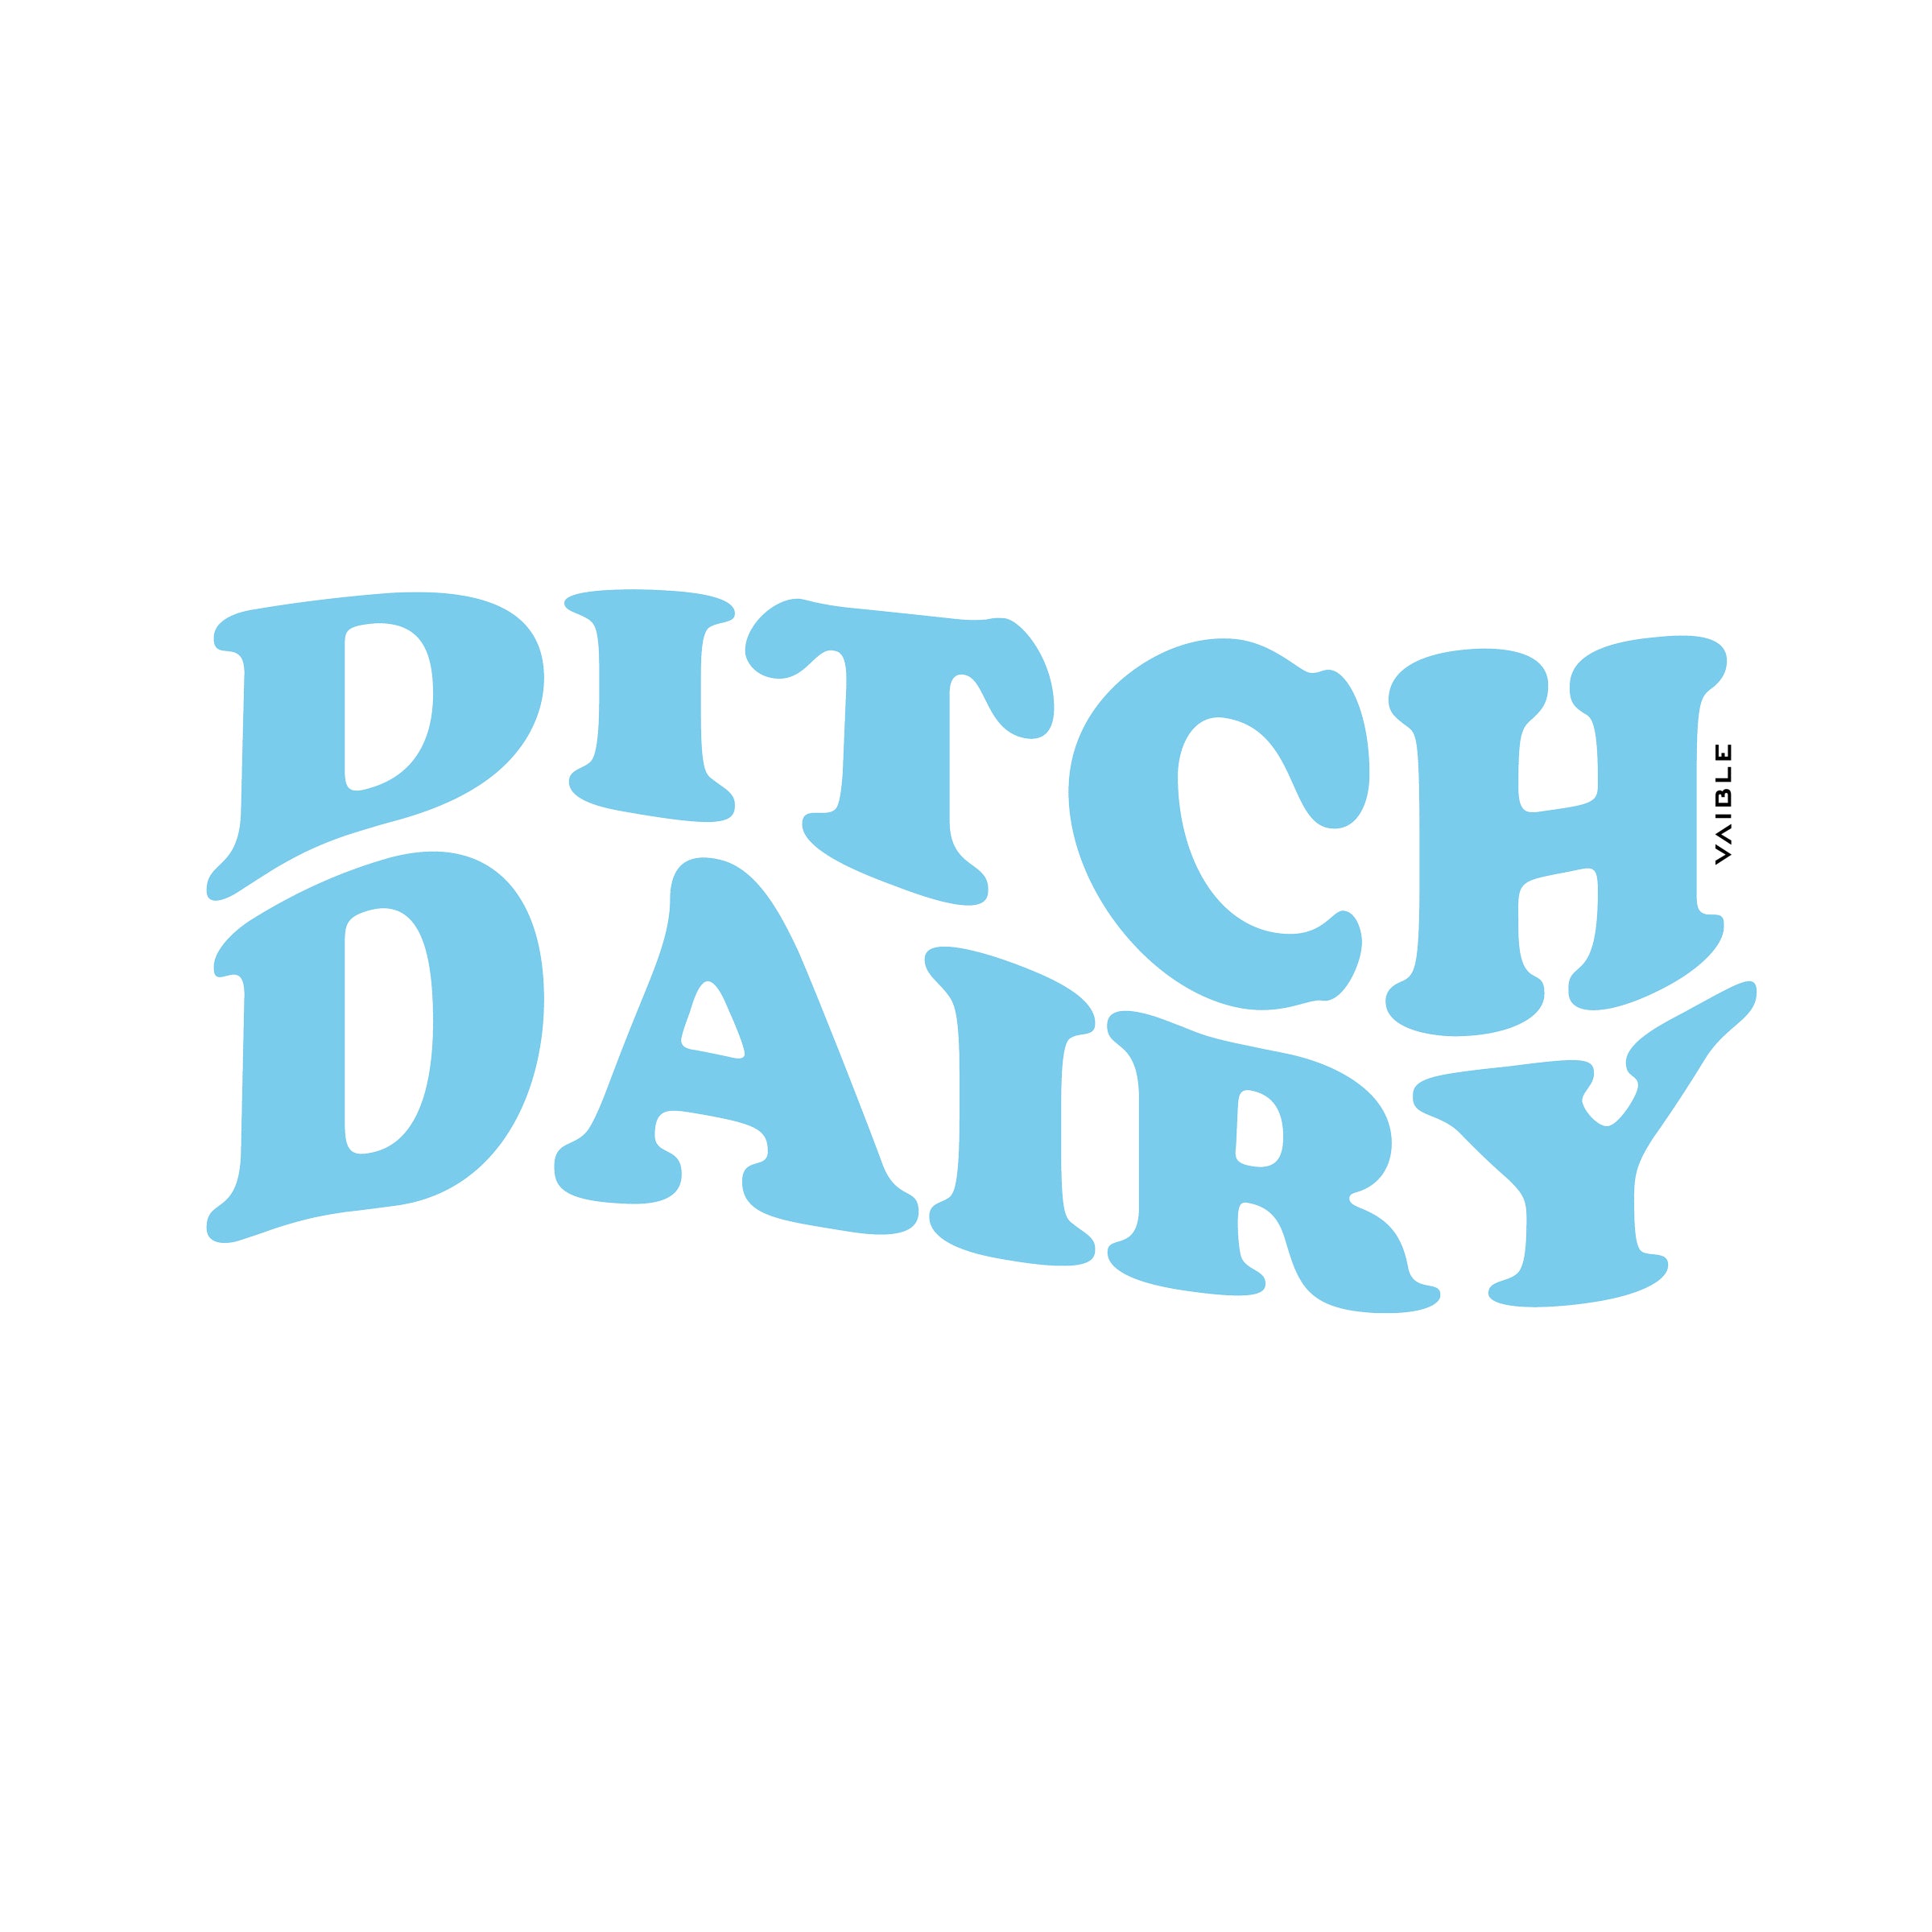 ditch dairy vegan  - Organic Oversized Shirt ST/ST